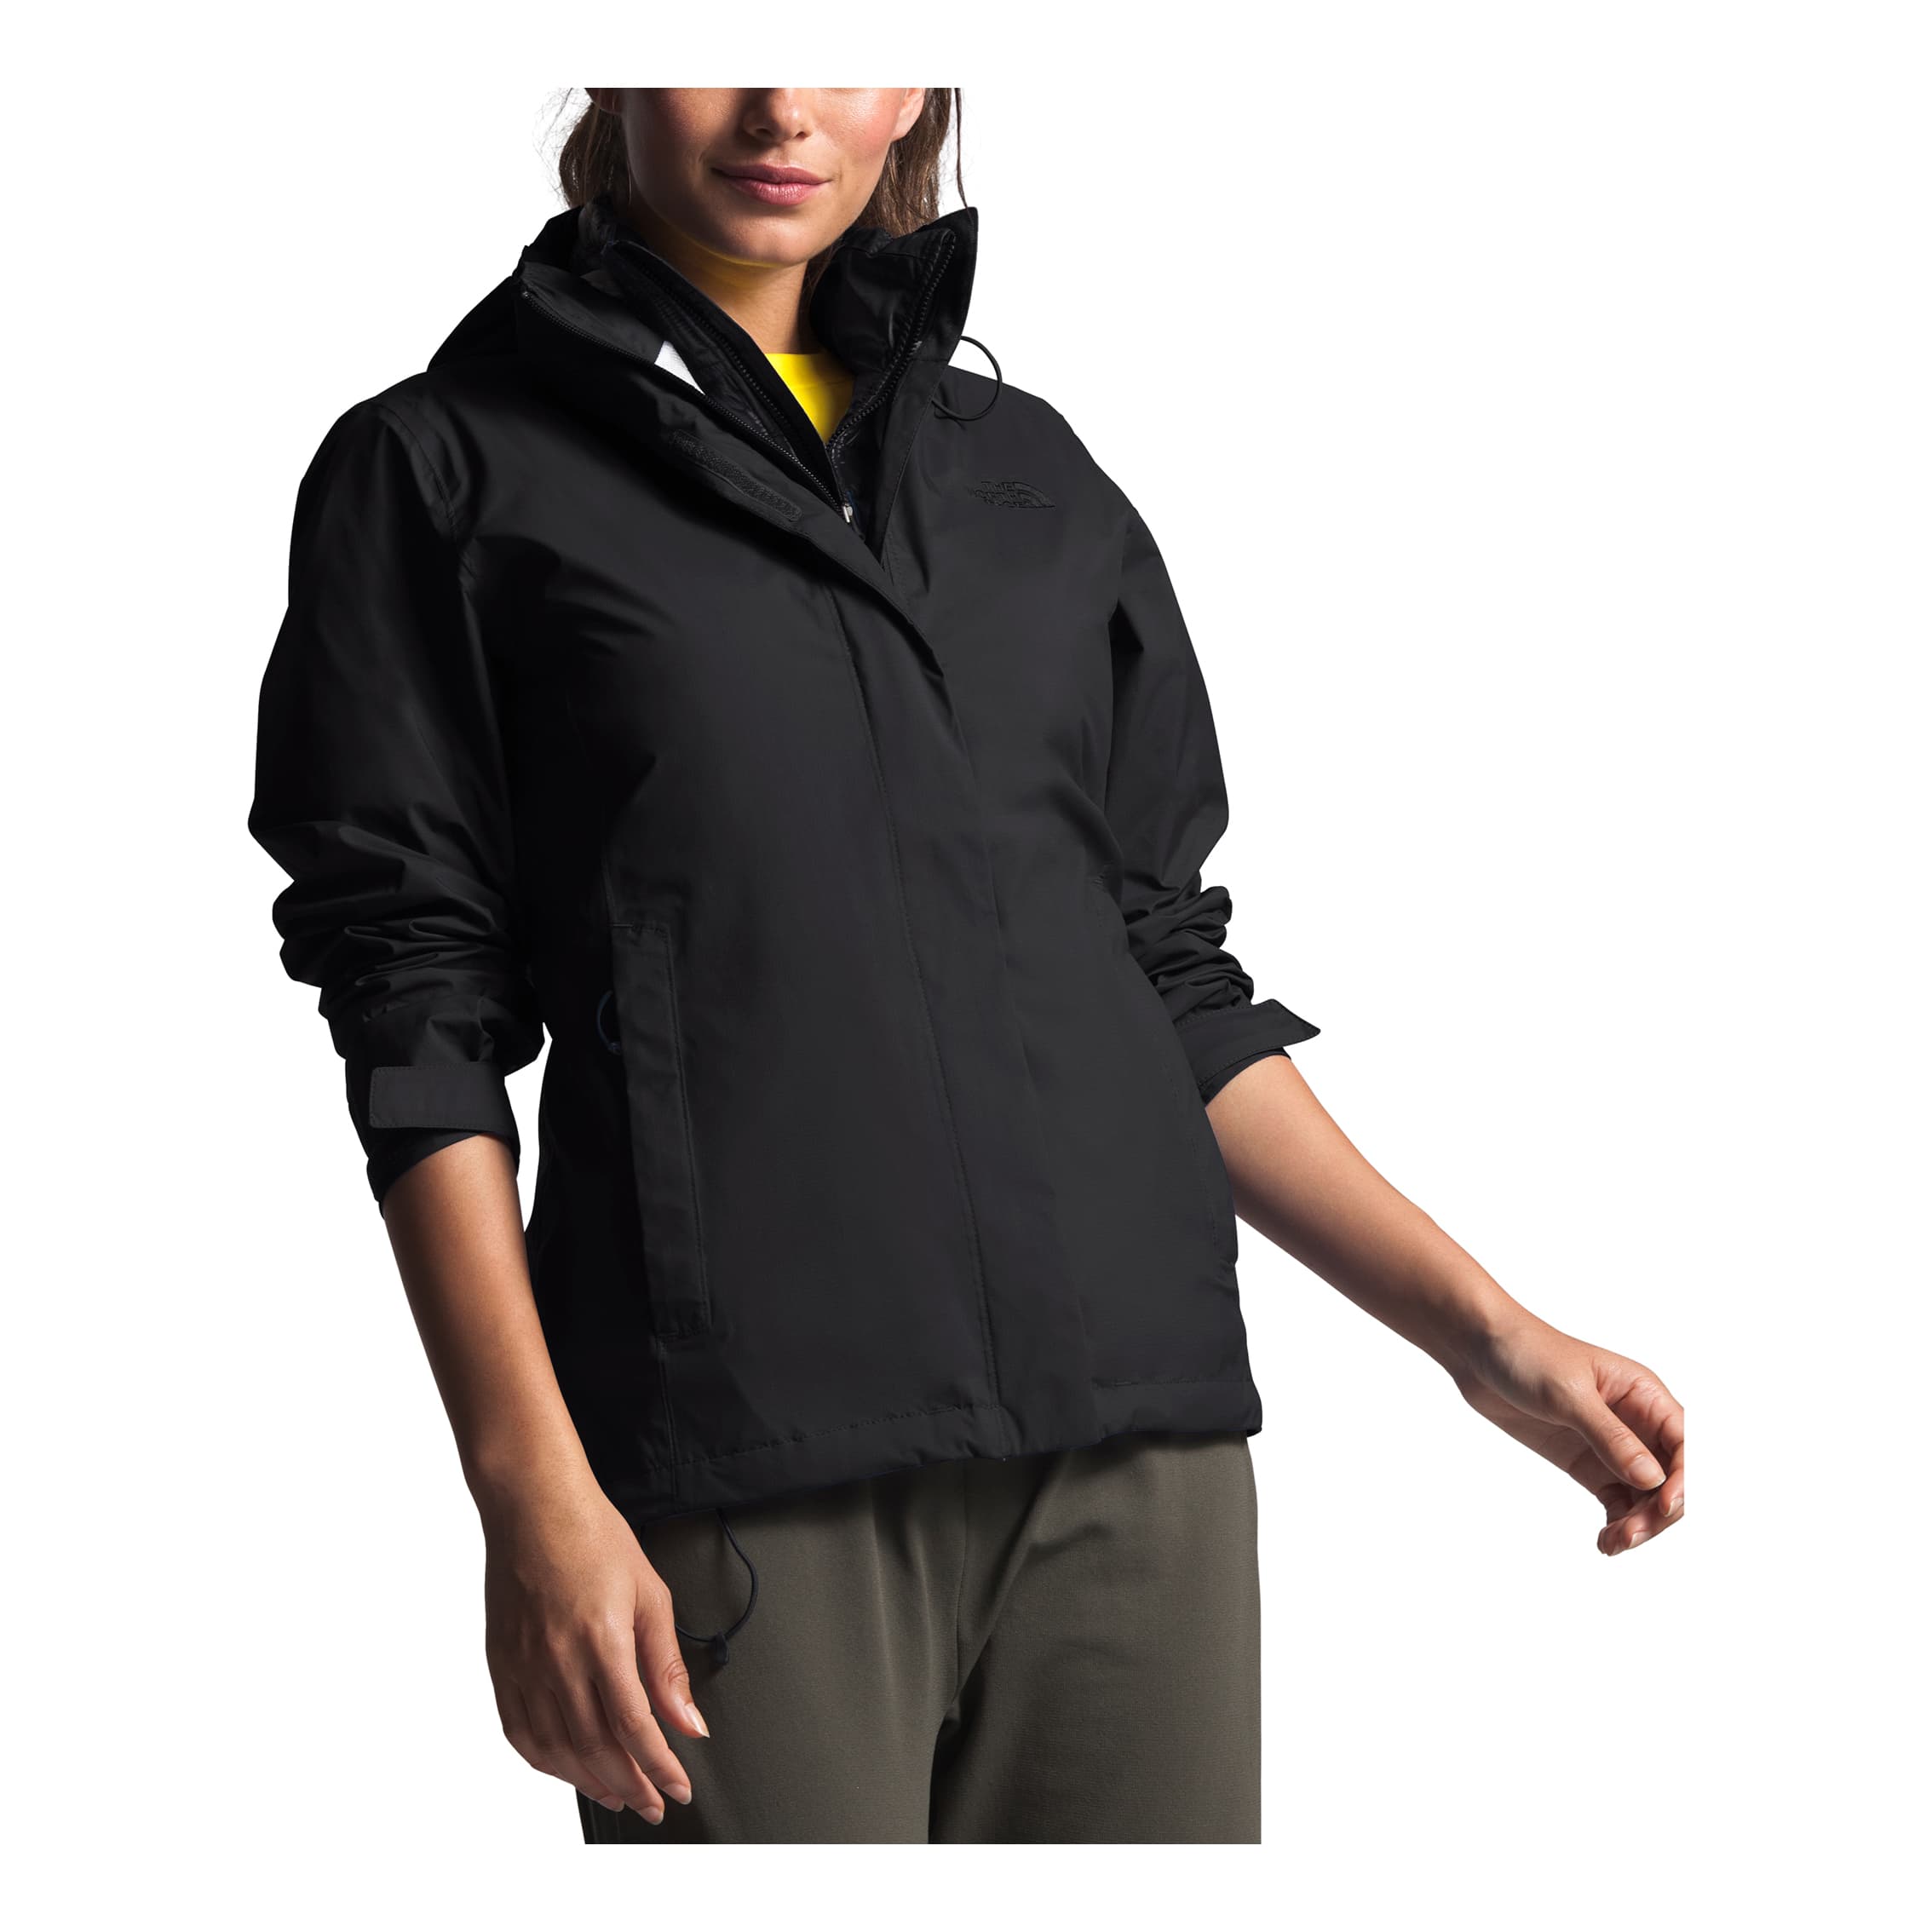 The North Face® Women’s Venture 2 Jacket - TNF Black/TNF Black